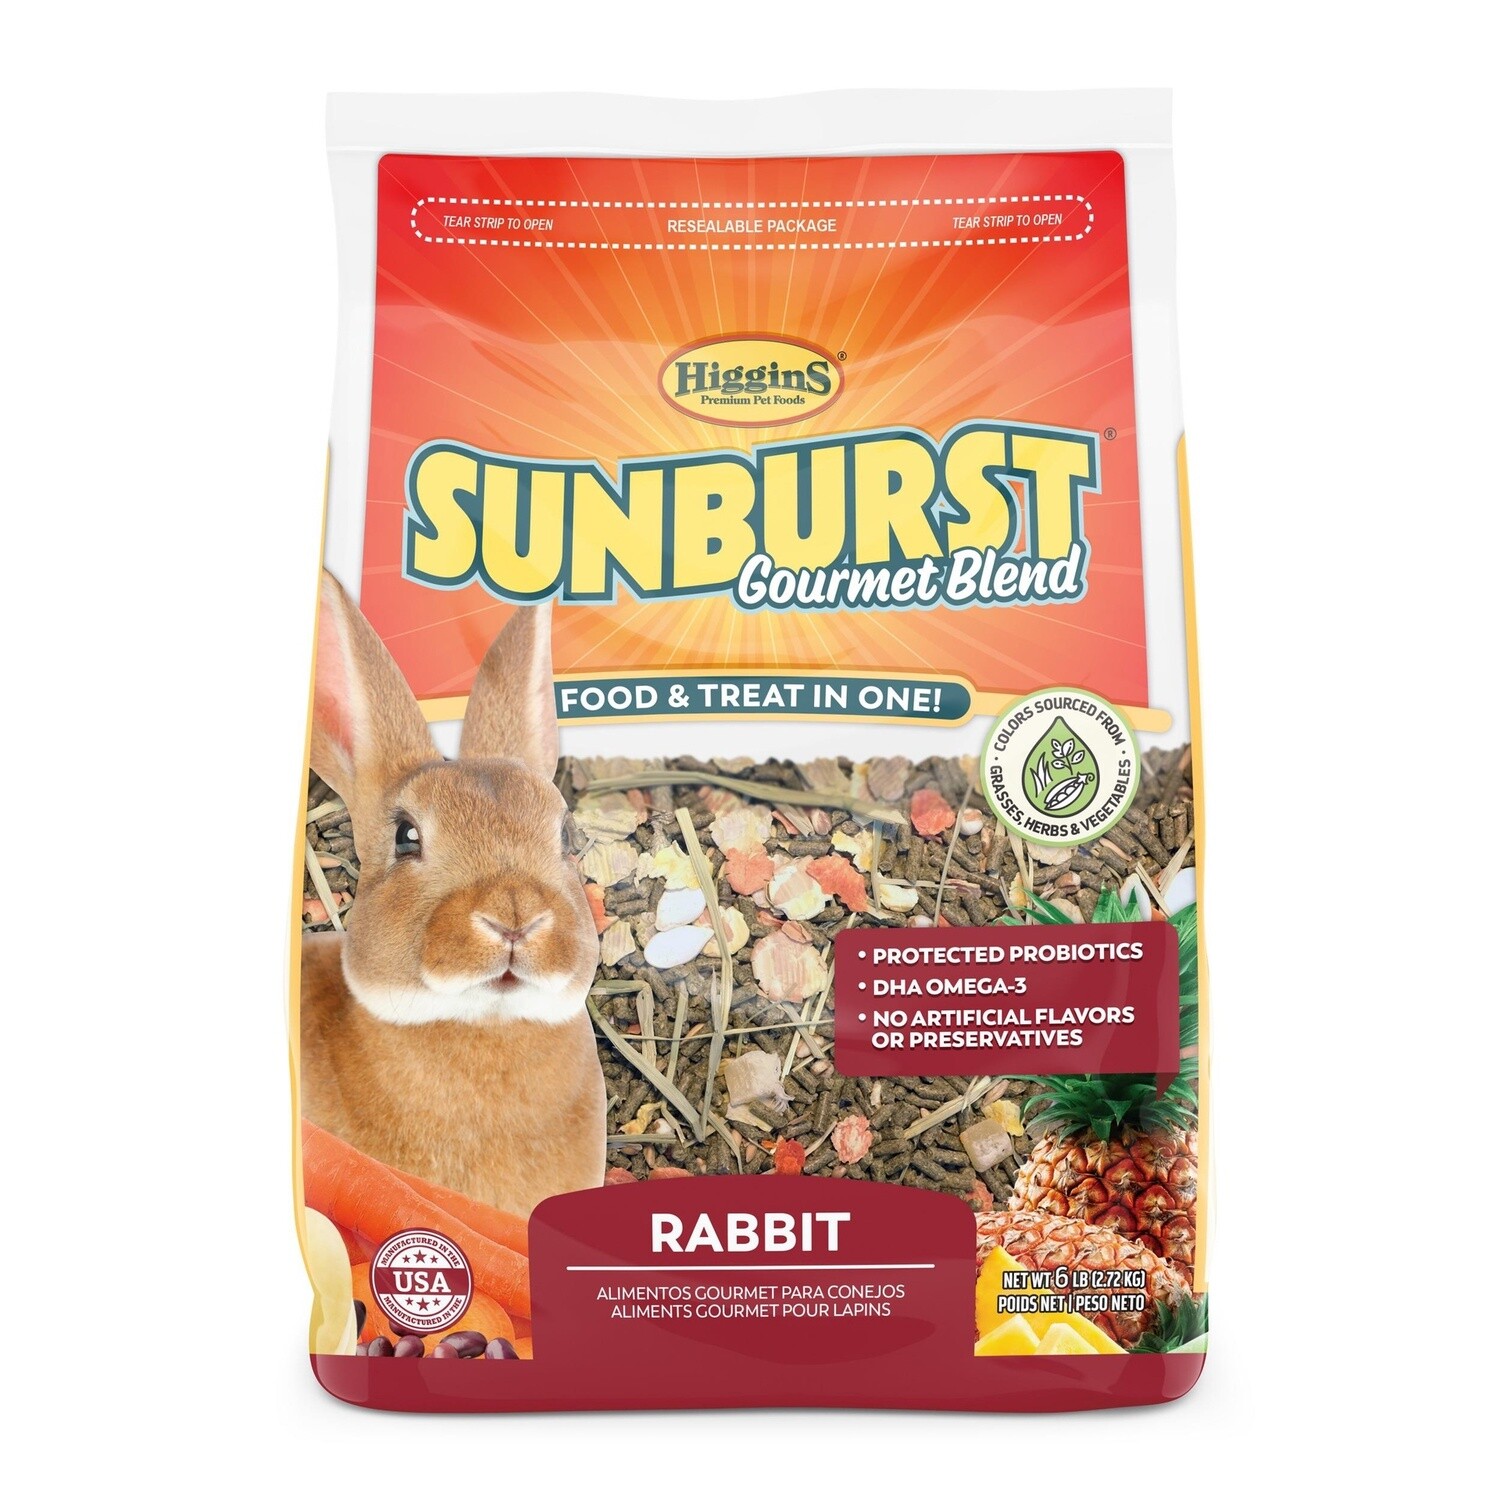 Higgins Sunburst Gourmet Blend Rabbit 6 lb